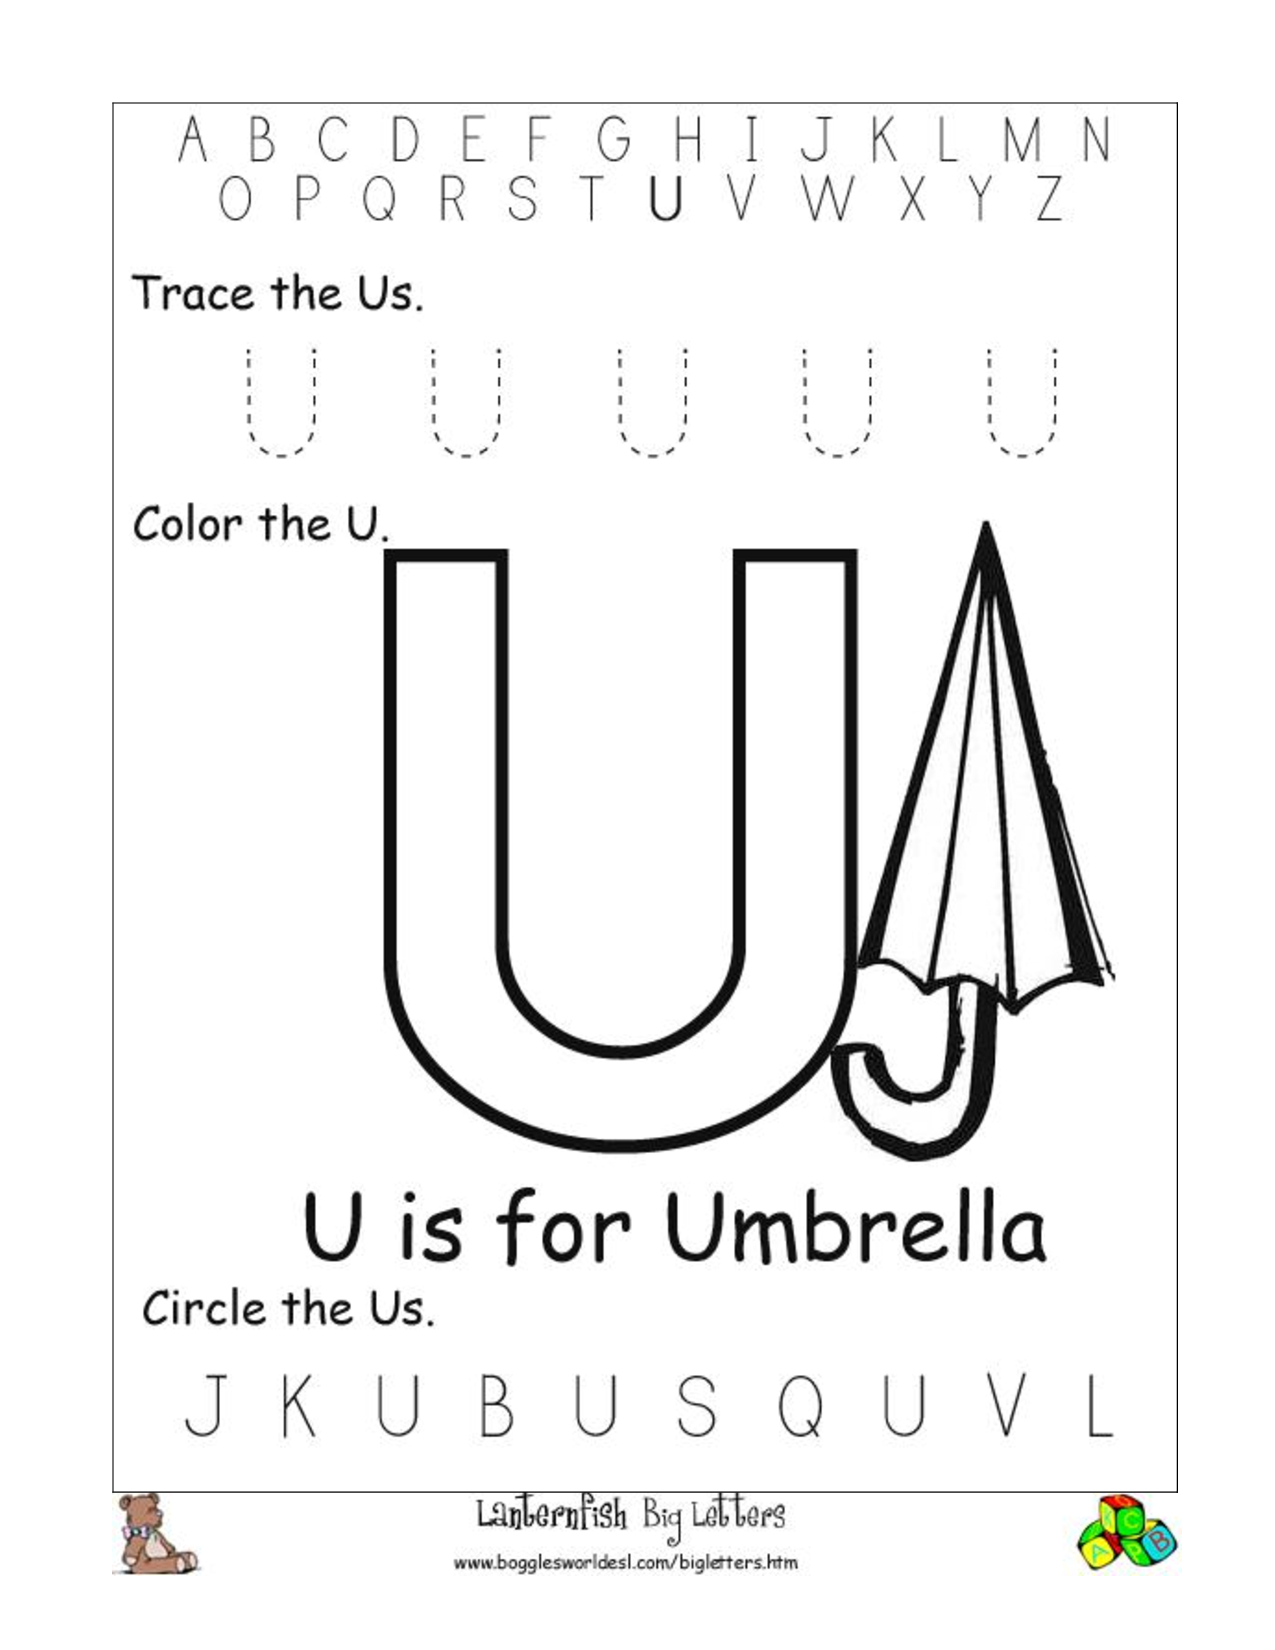 Alphabet Worksheets For Preschoolers | Alphabet Worksheet throughout Large Tracing Letters For Preschoolers